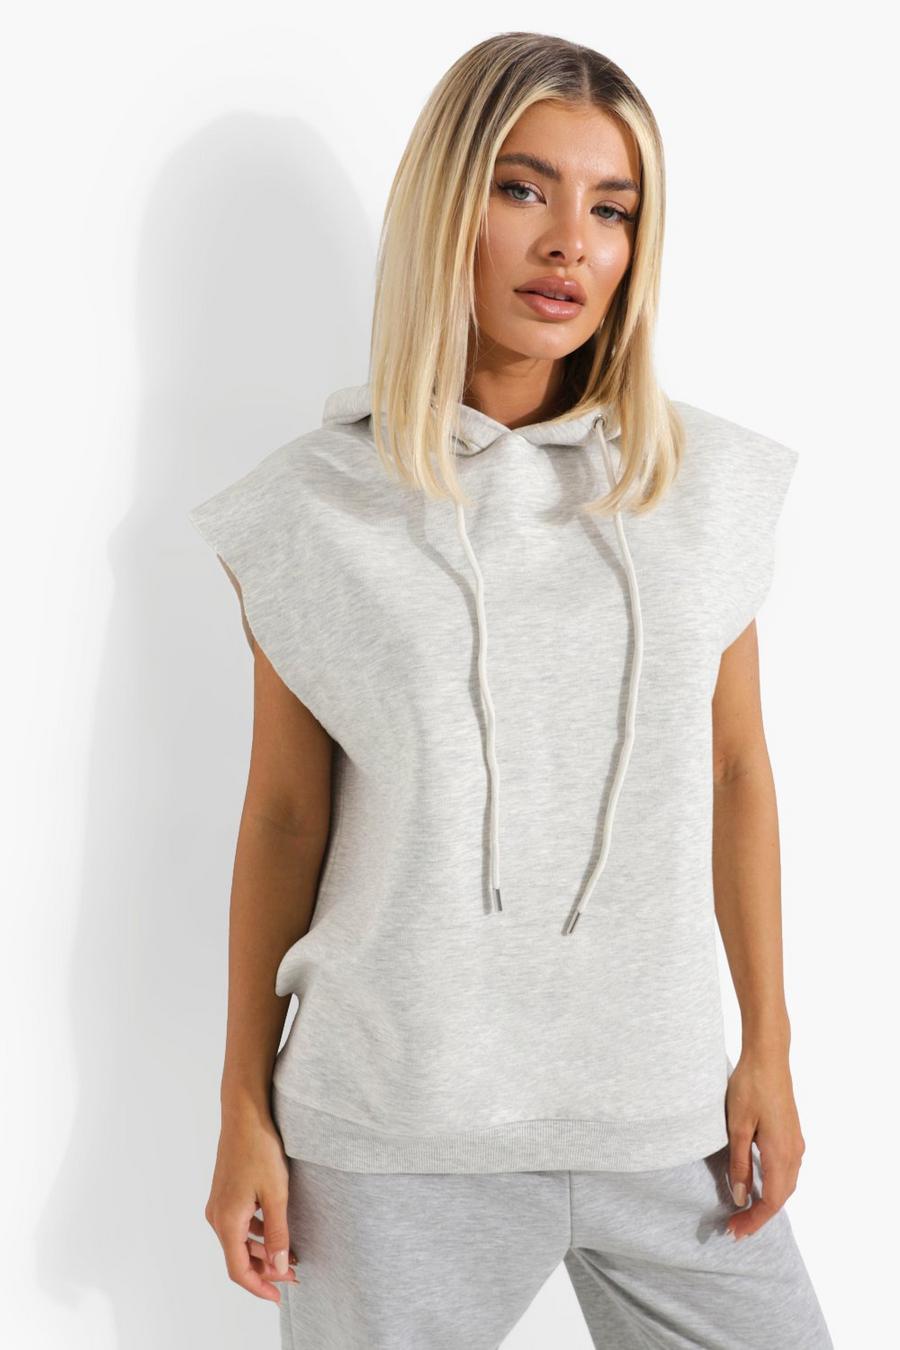 Sleeveless hoodie for women